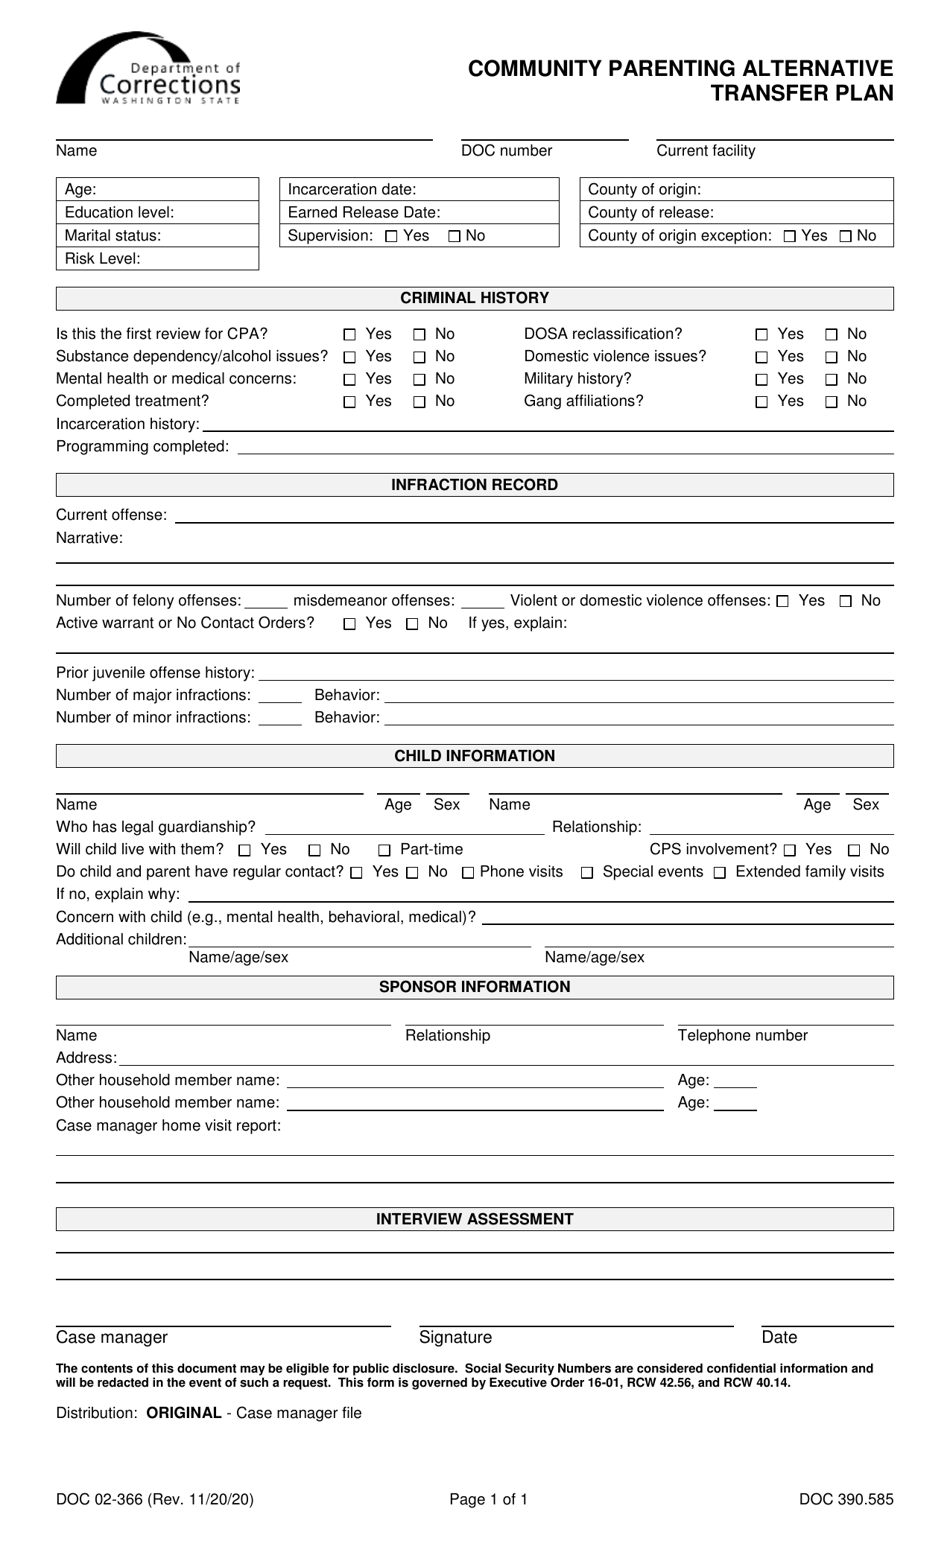 Form DOC02-366 Community Parenting Alternative Transfer Plan - Washington, Page 1